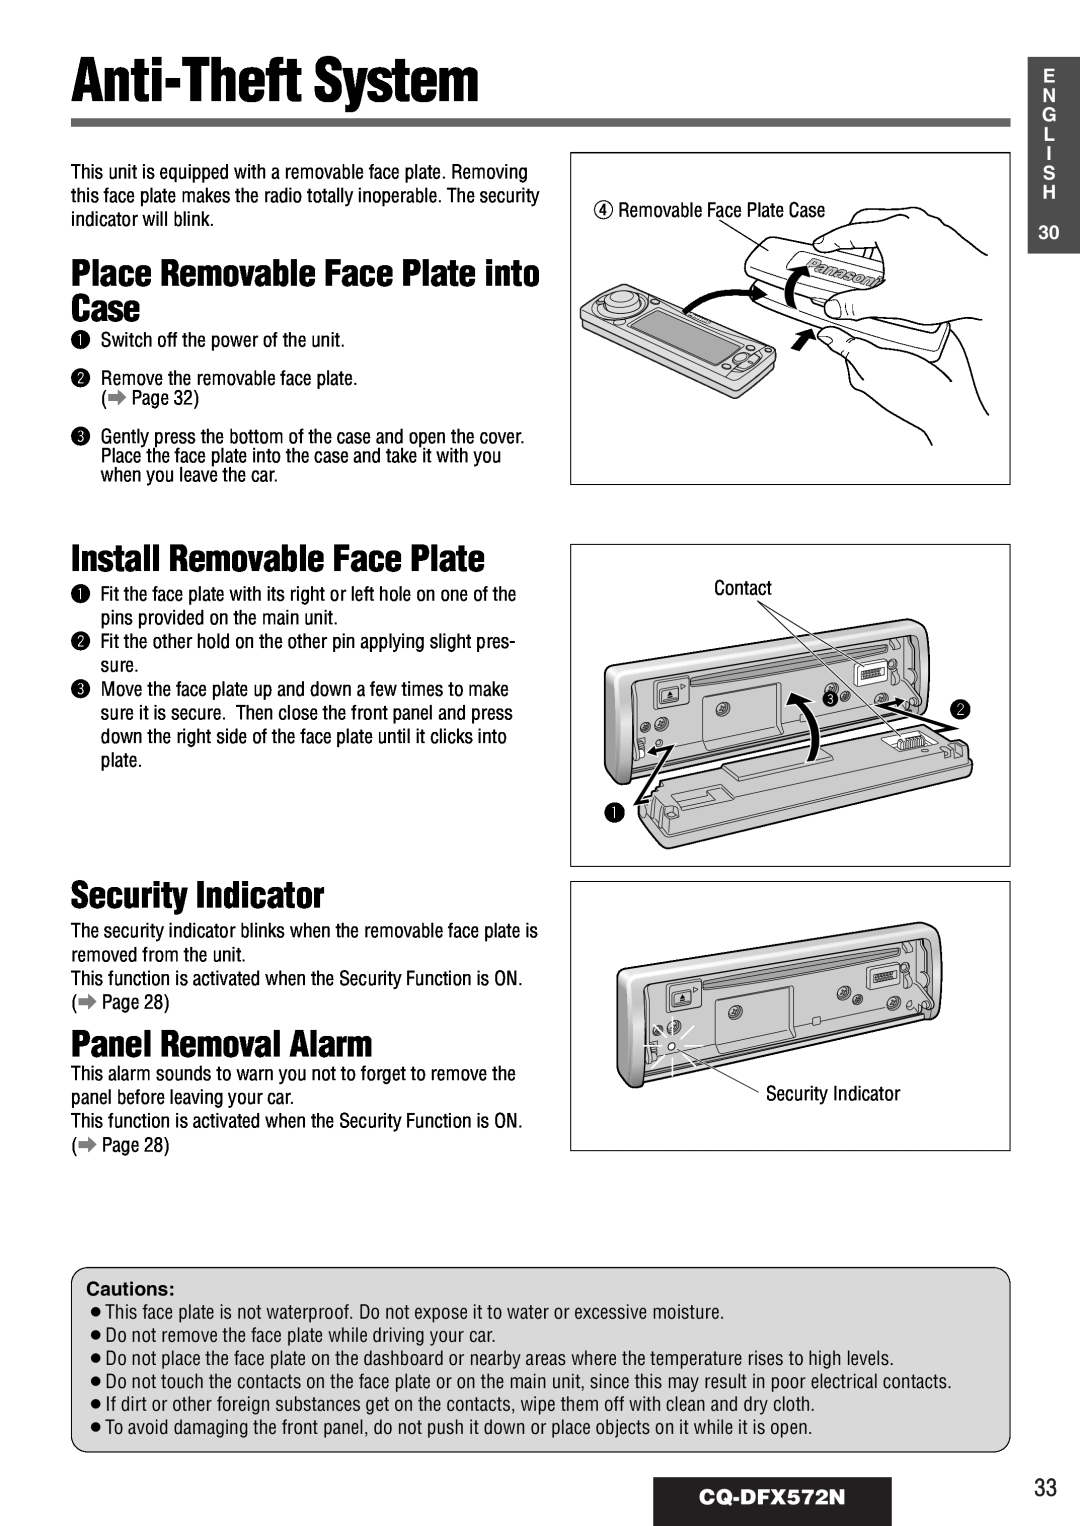 Panasonic Anti-TheftSystem, Place Removable Face Plate into Case, Install Removable Face Plate, CQ-DFX572N33, E N G L 